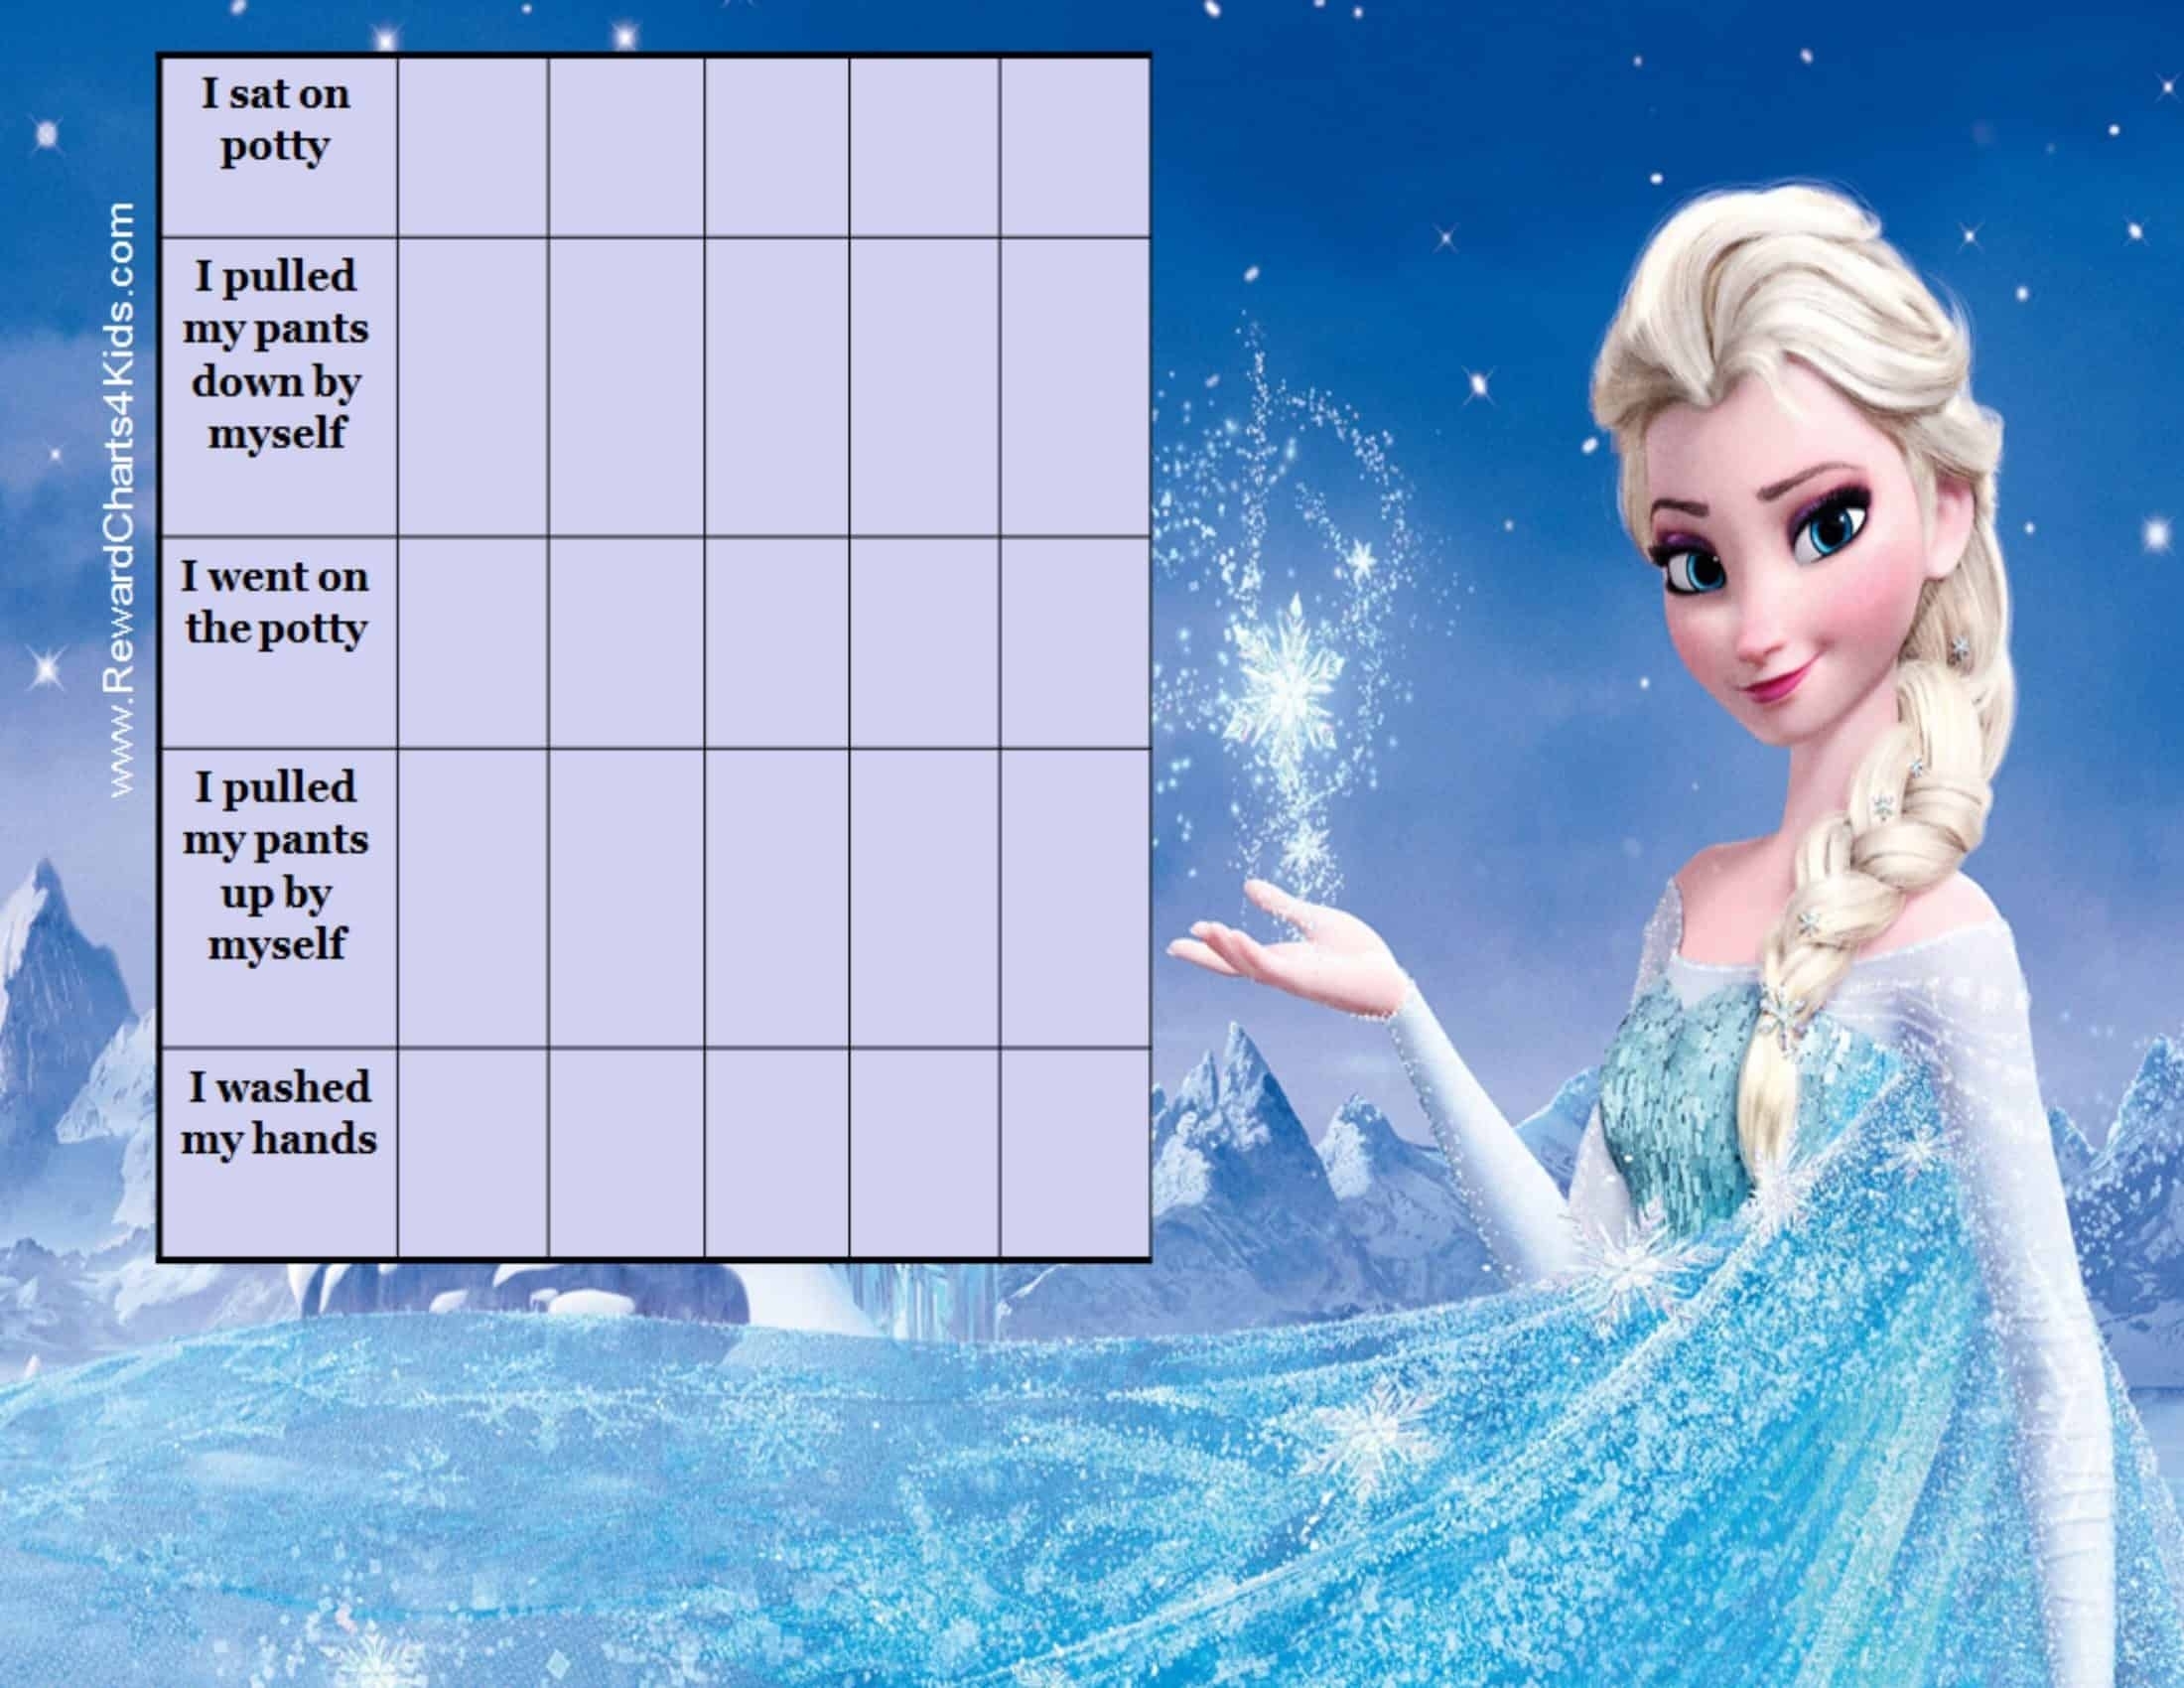 Take Frozen Monday - Friday Star Chart